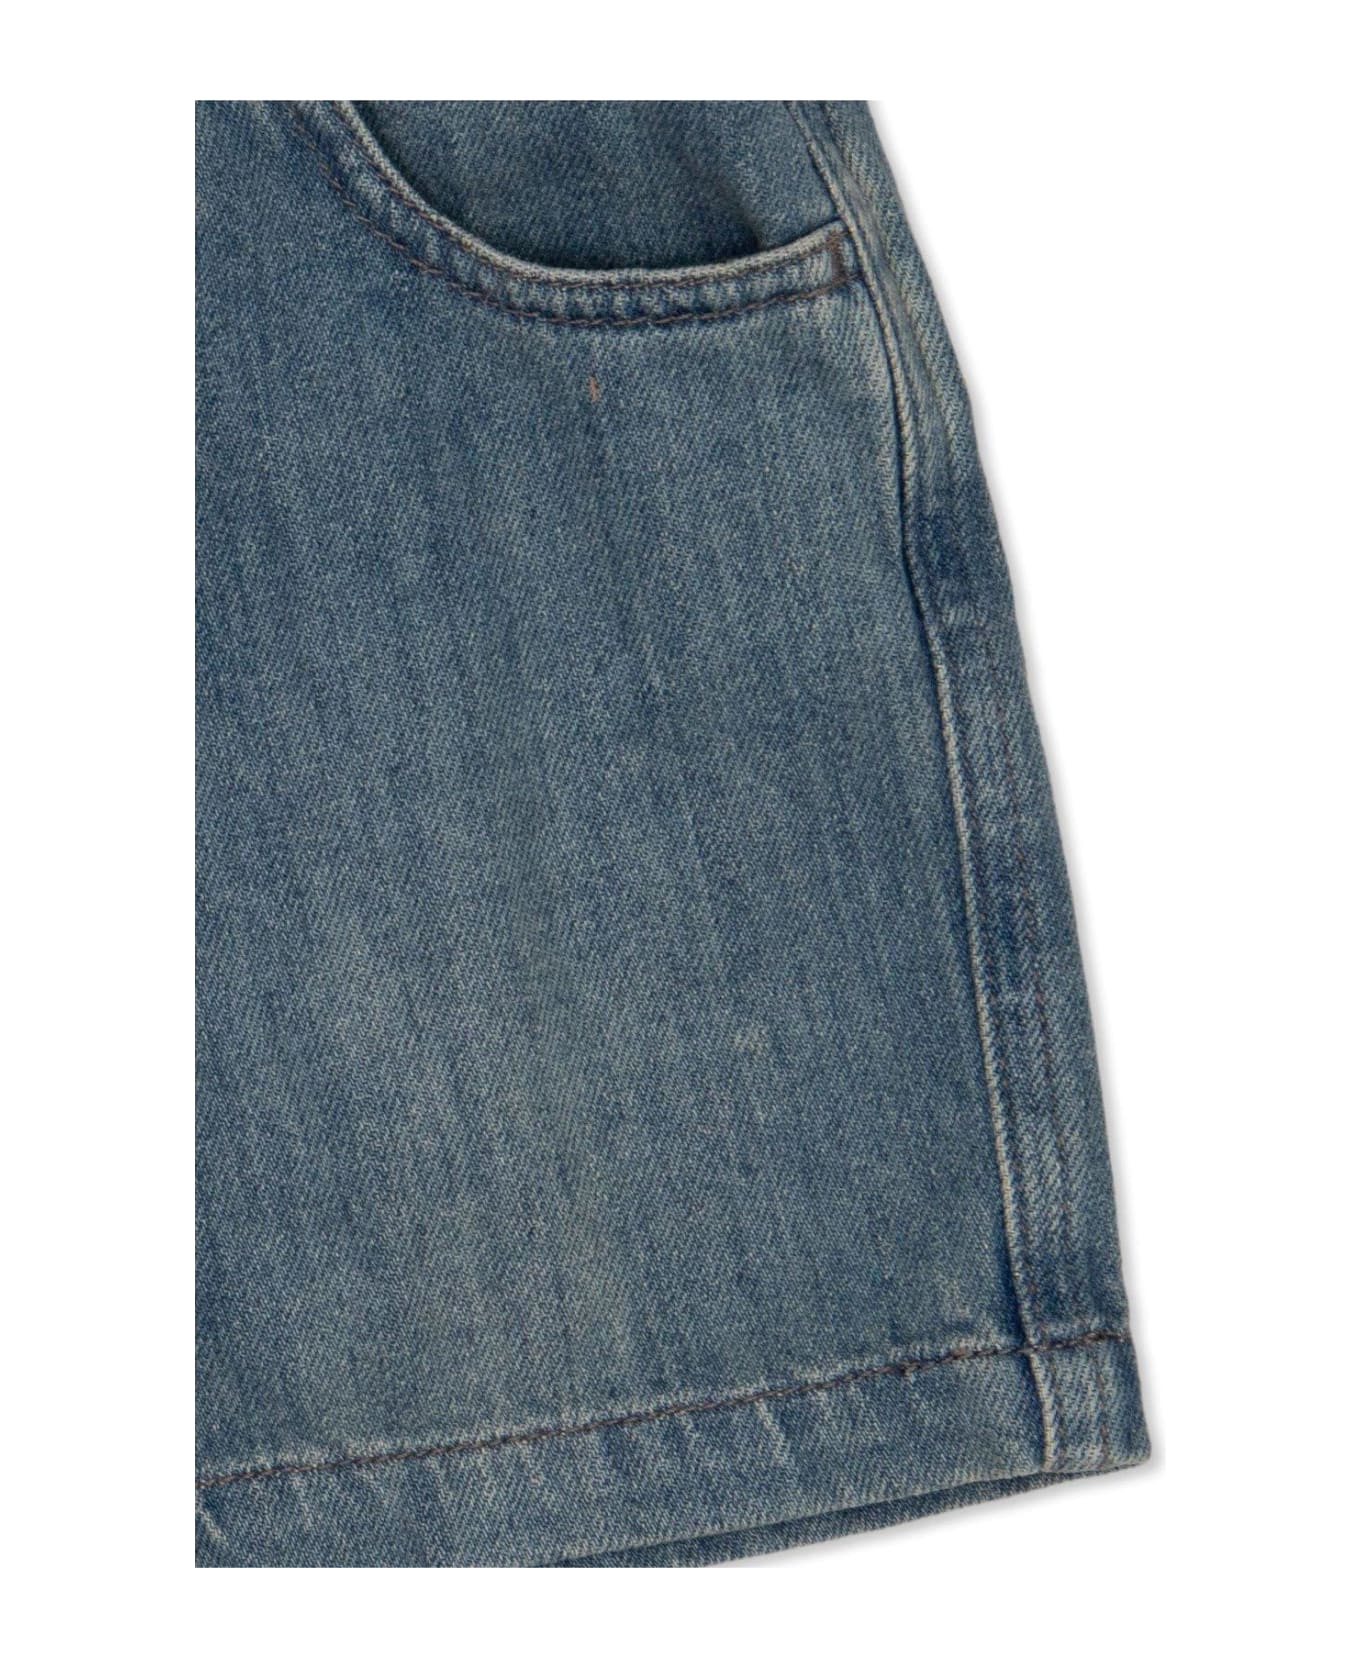 Gucci Web Detailed Mid-rise Denim Shorts - Blue